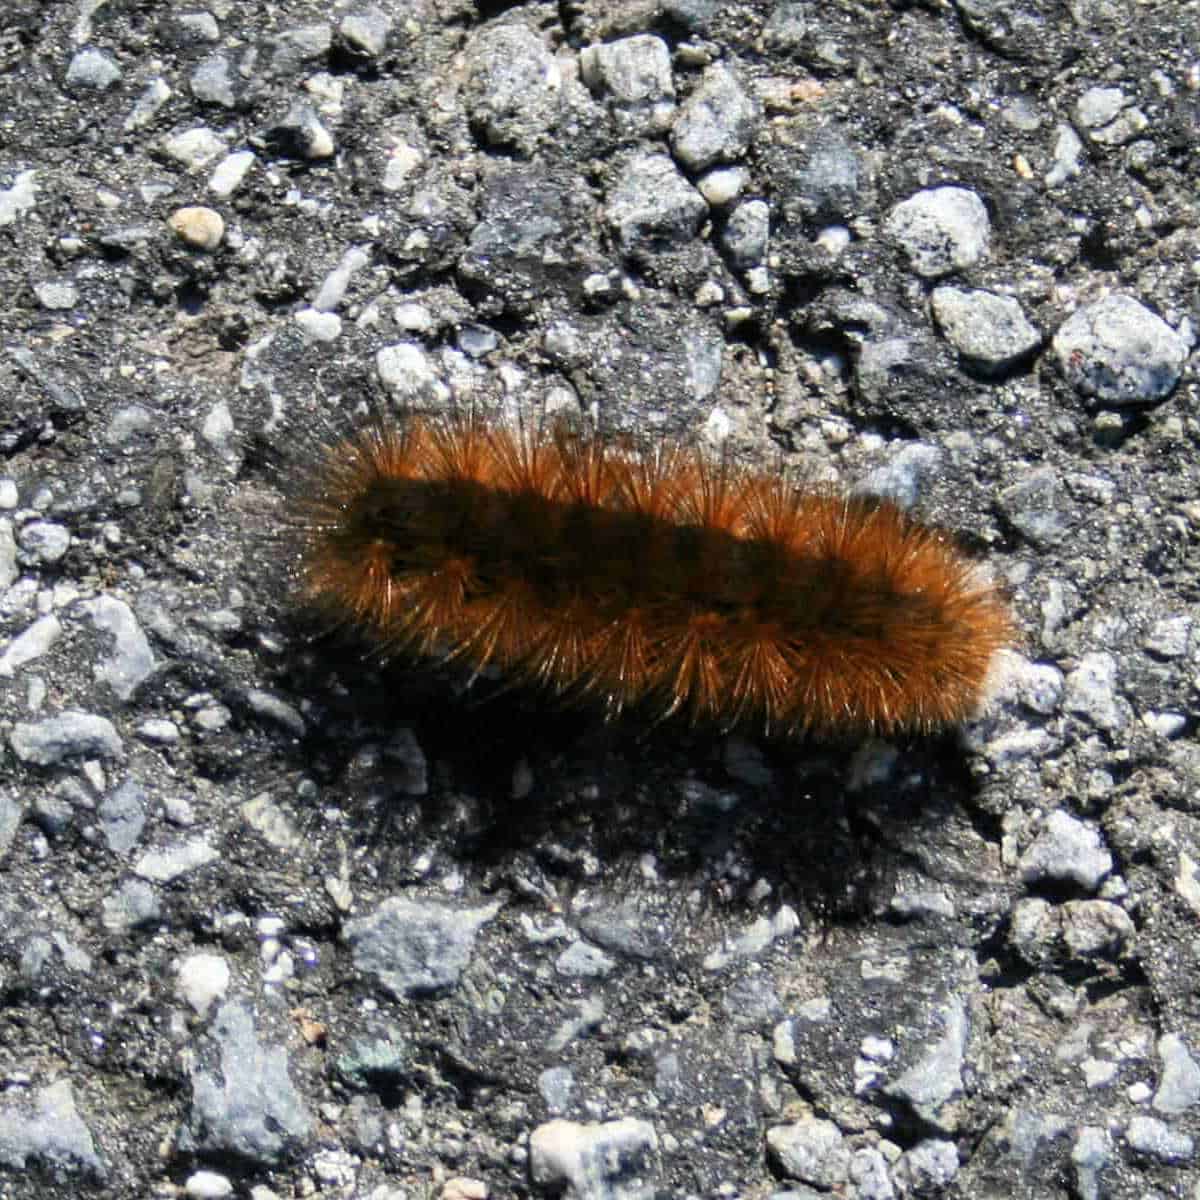 woolly bear caterpillar on a gravel road